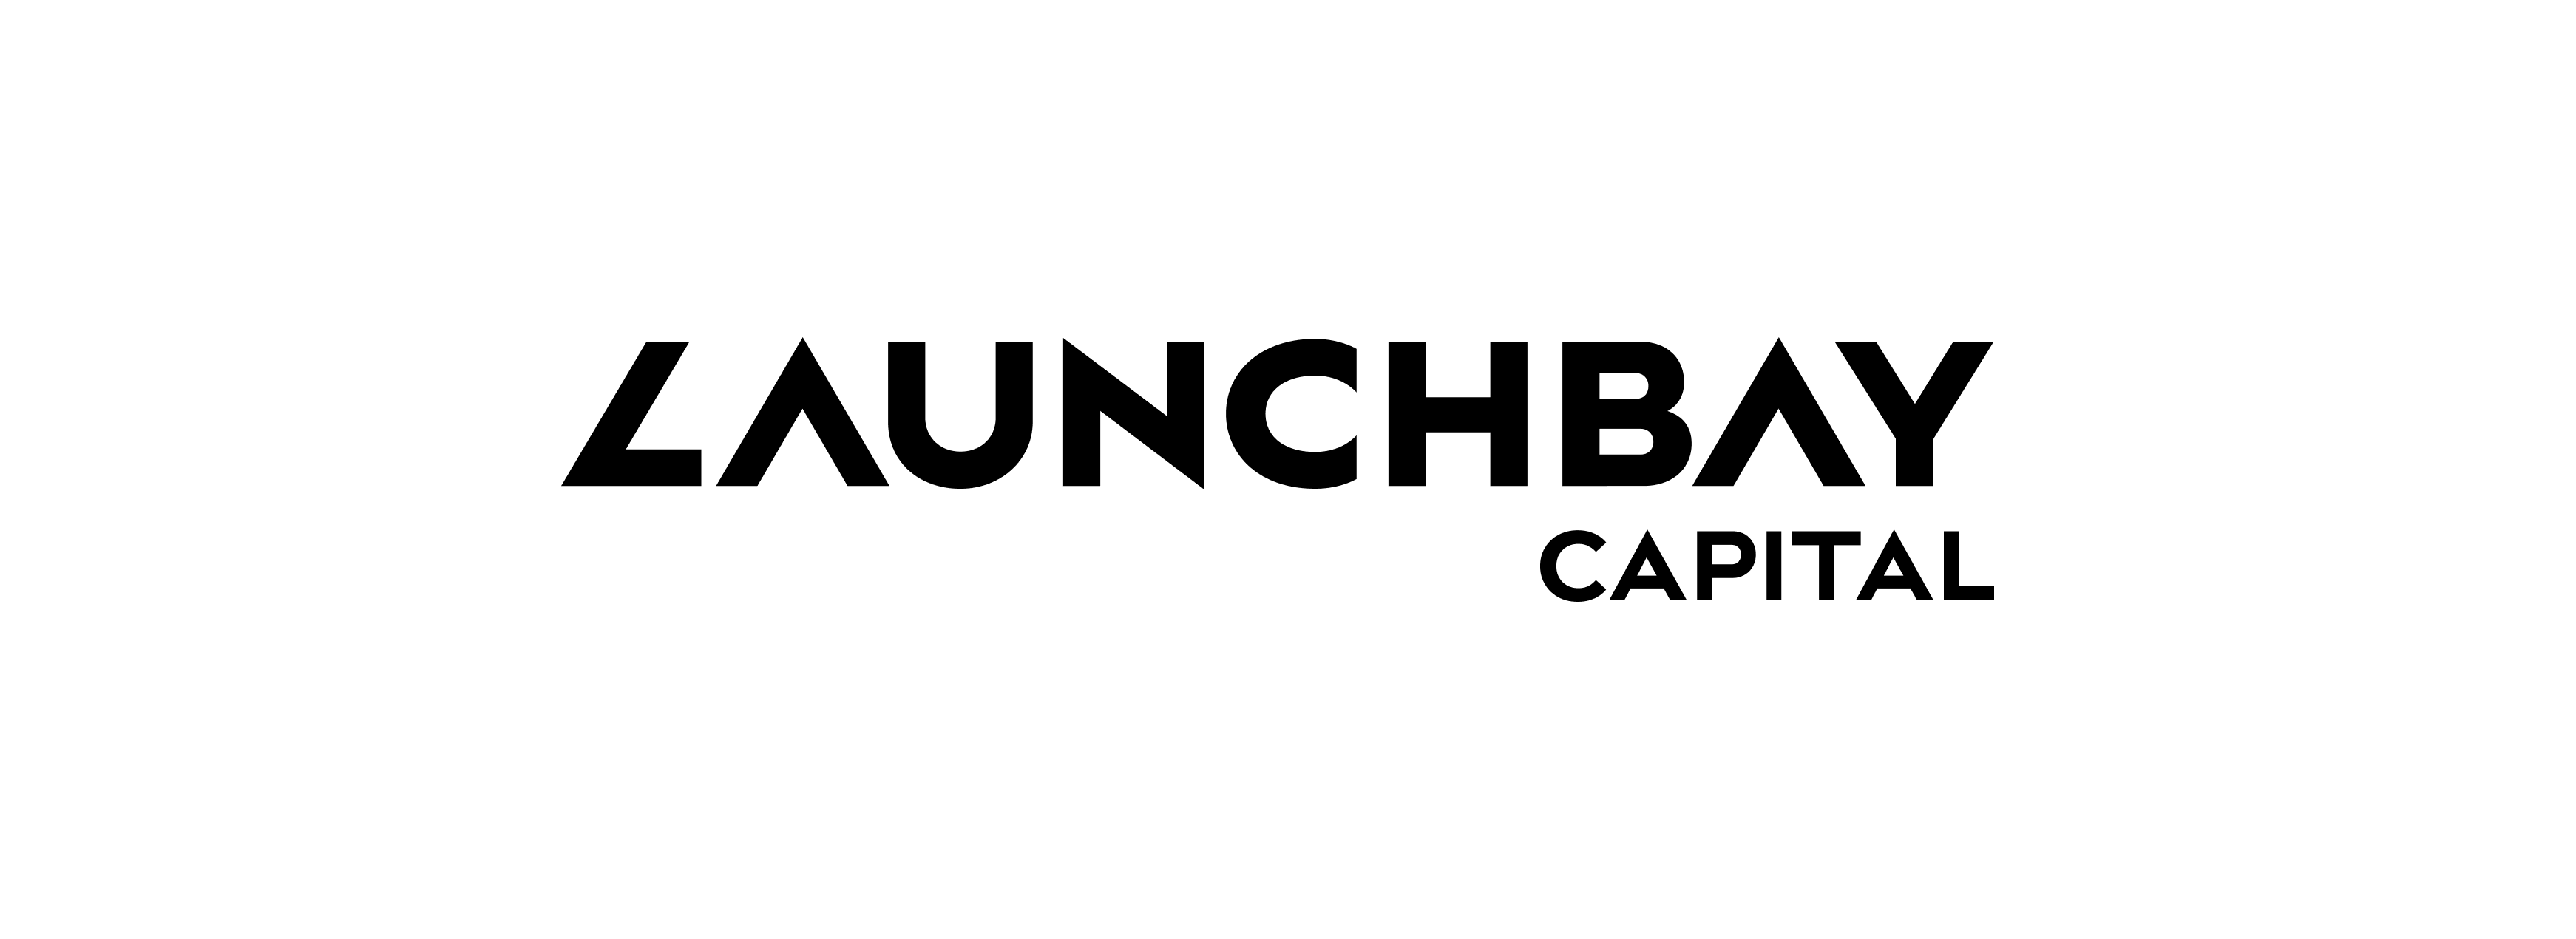 Launchbay Capital@2x.png